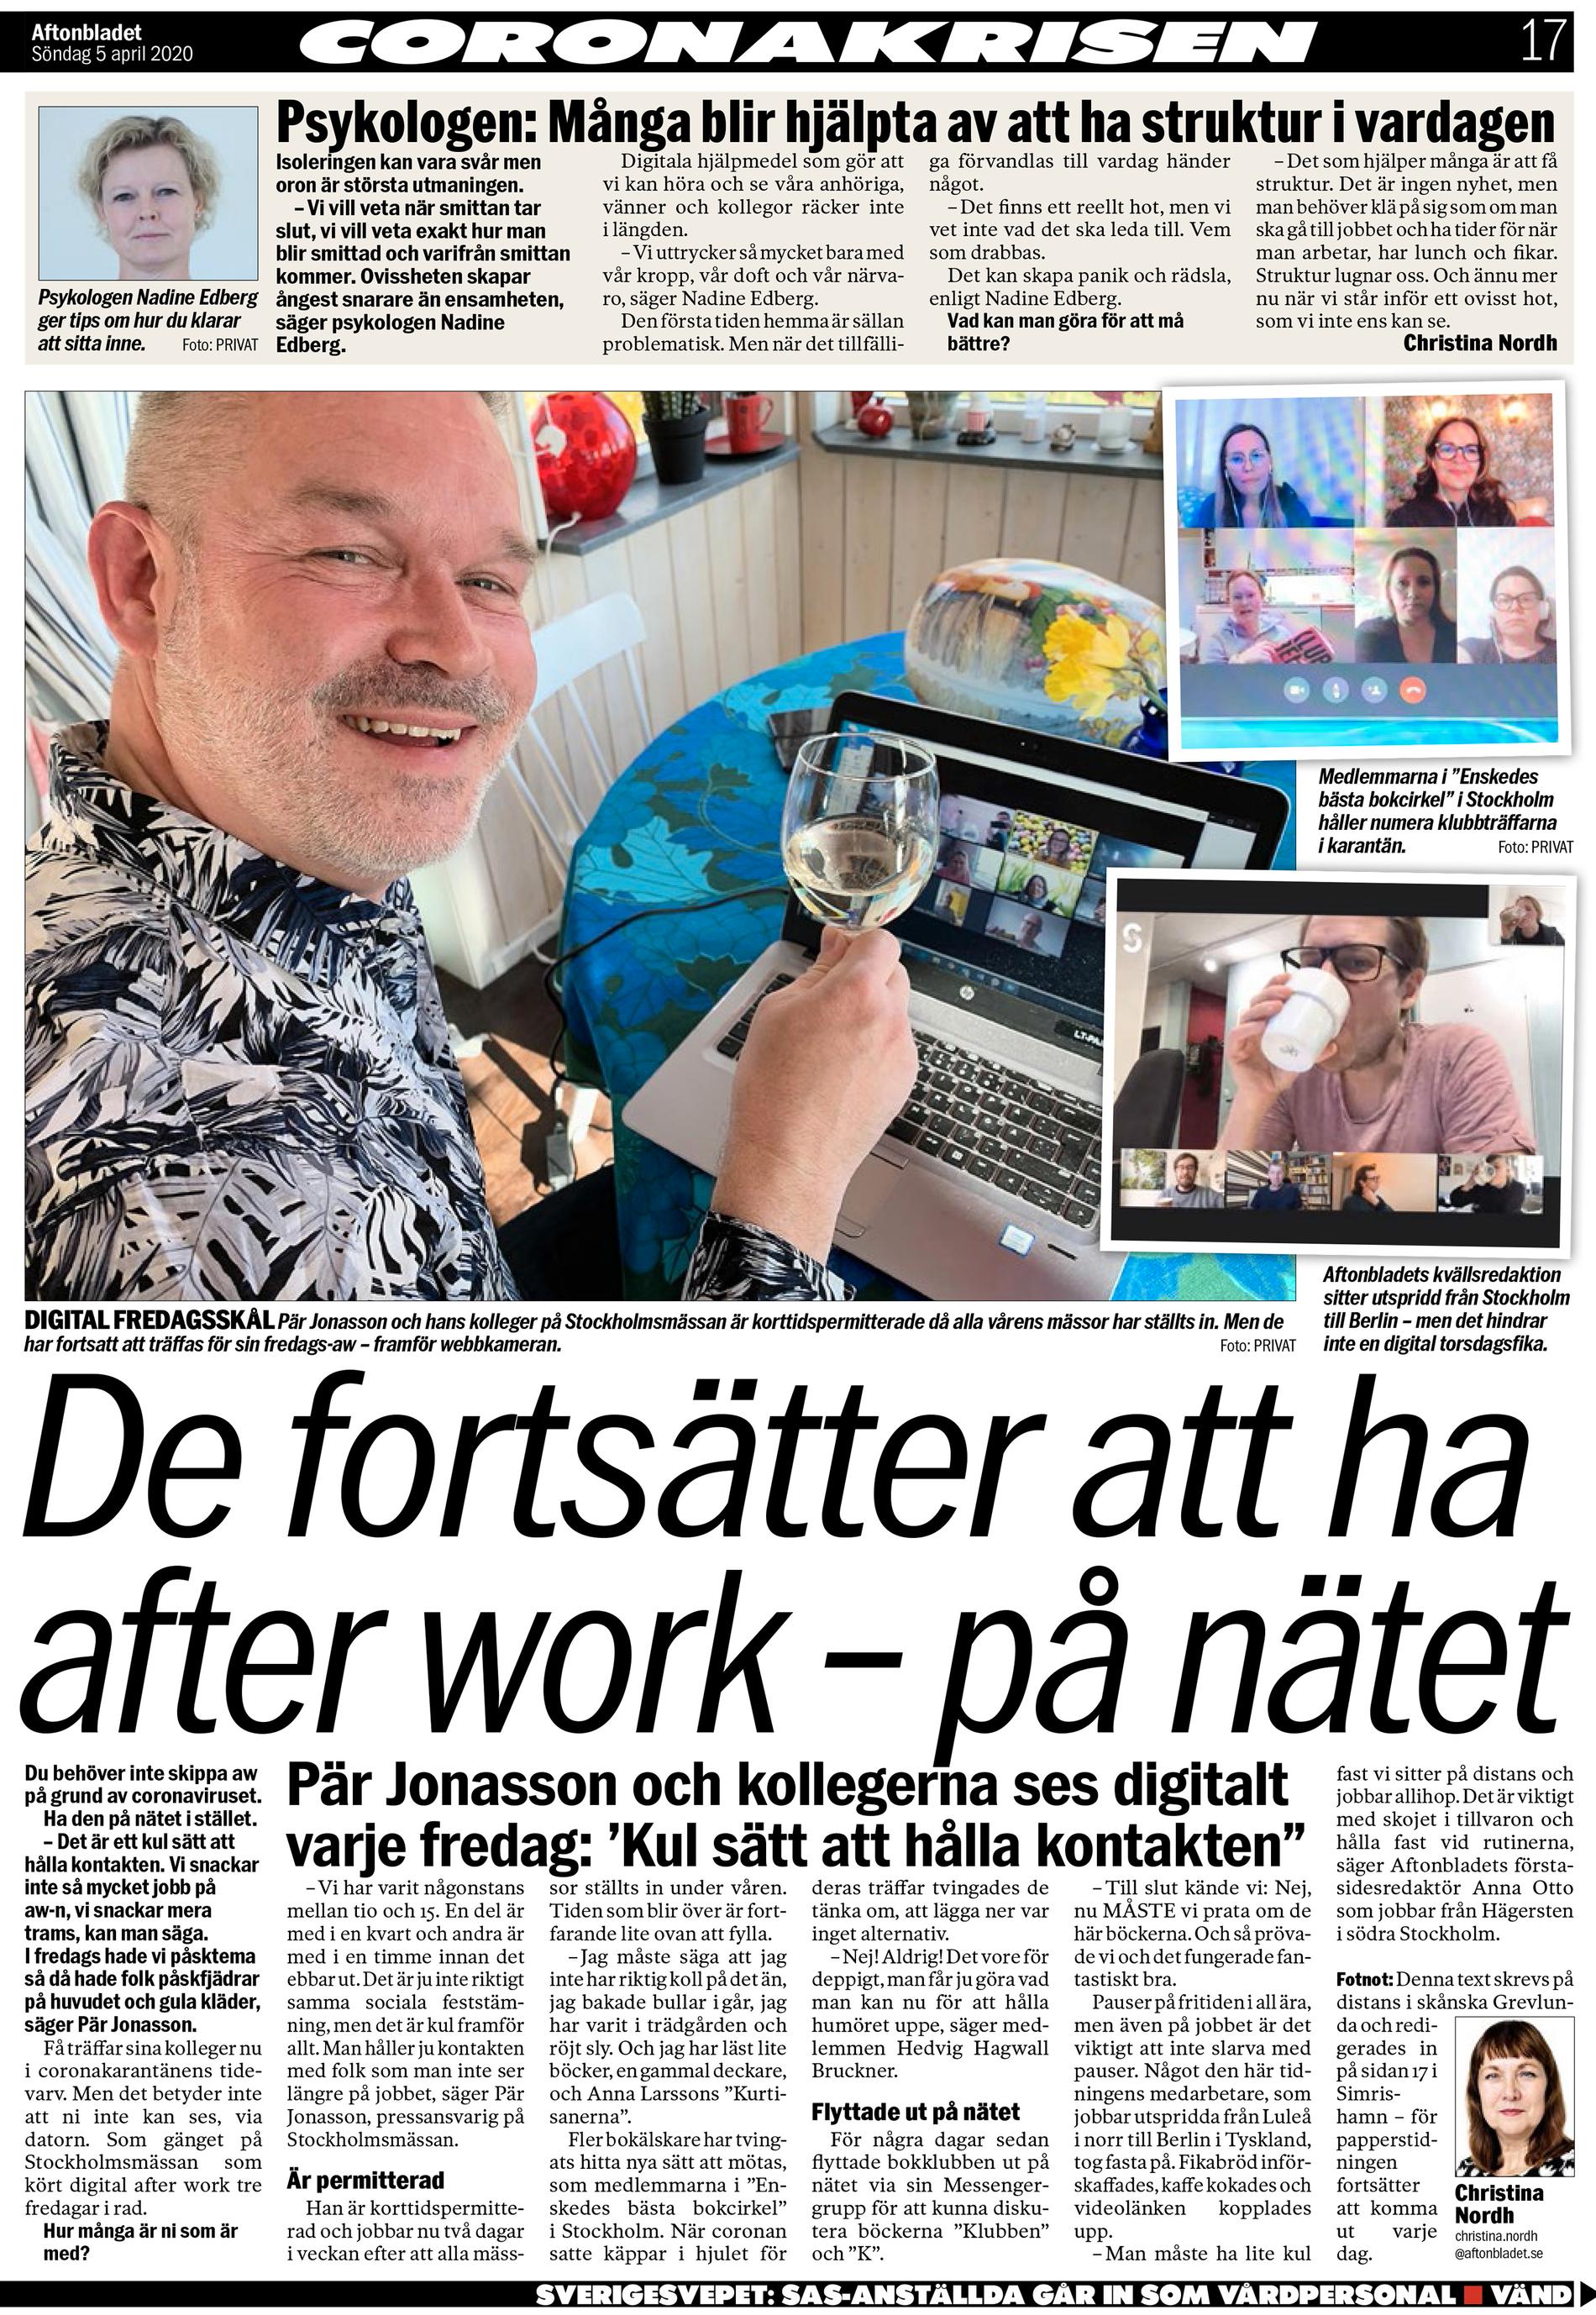 Aftonbladets printupplaga söndag 4 april 2020.